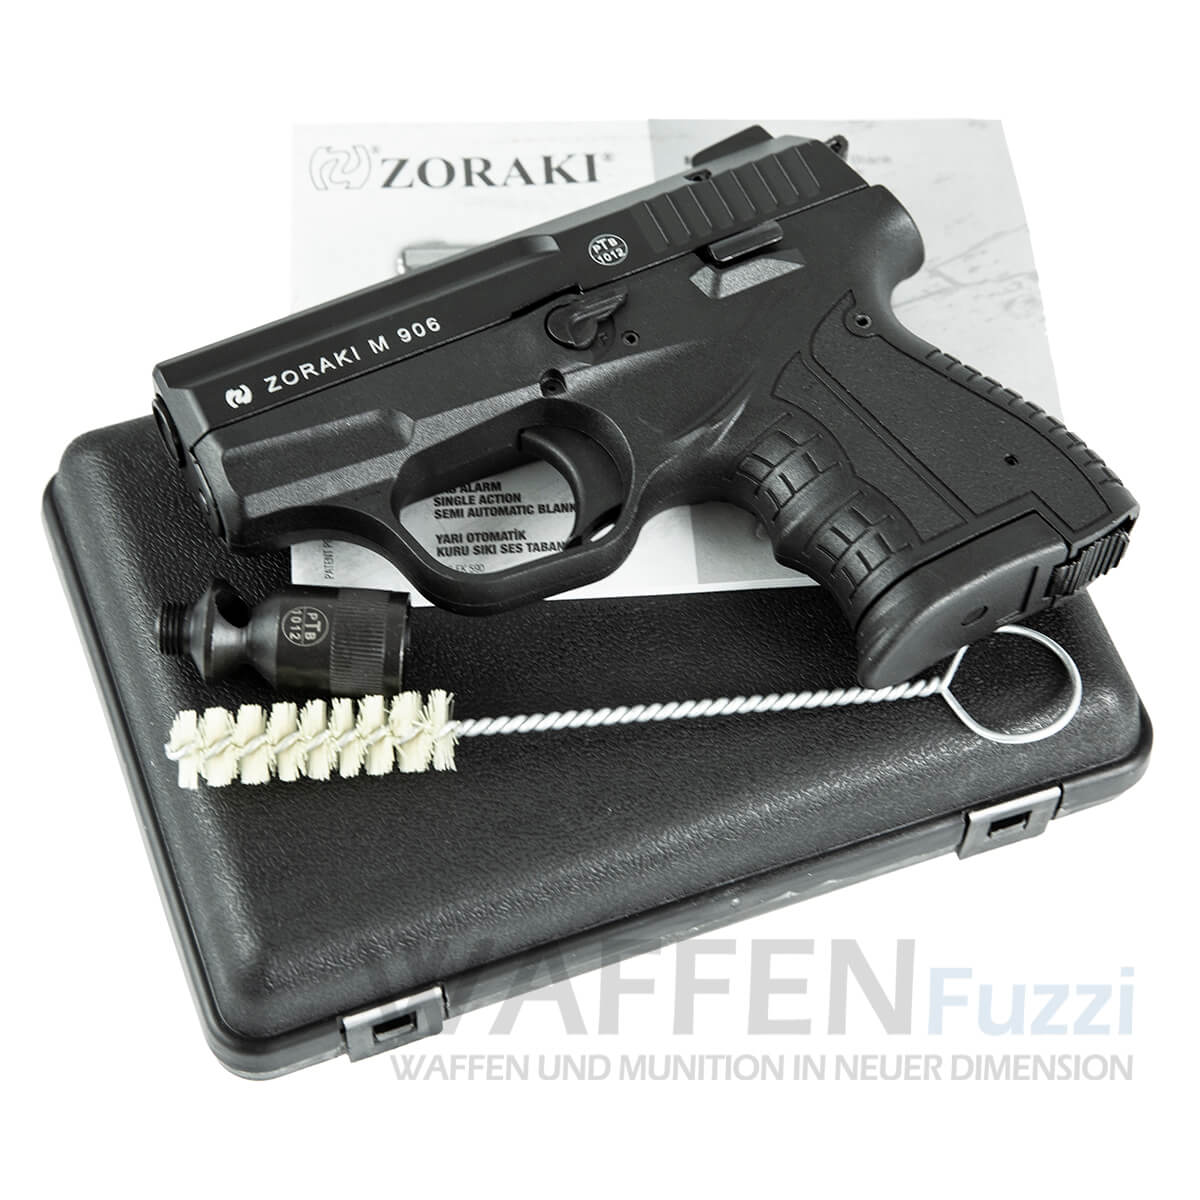 Zoraki 906 Taschenpistole Kaliber 9mm PAK 6 Schuss PTB Zulassung 1012